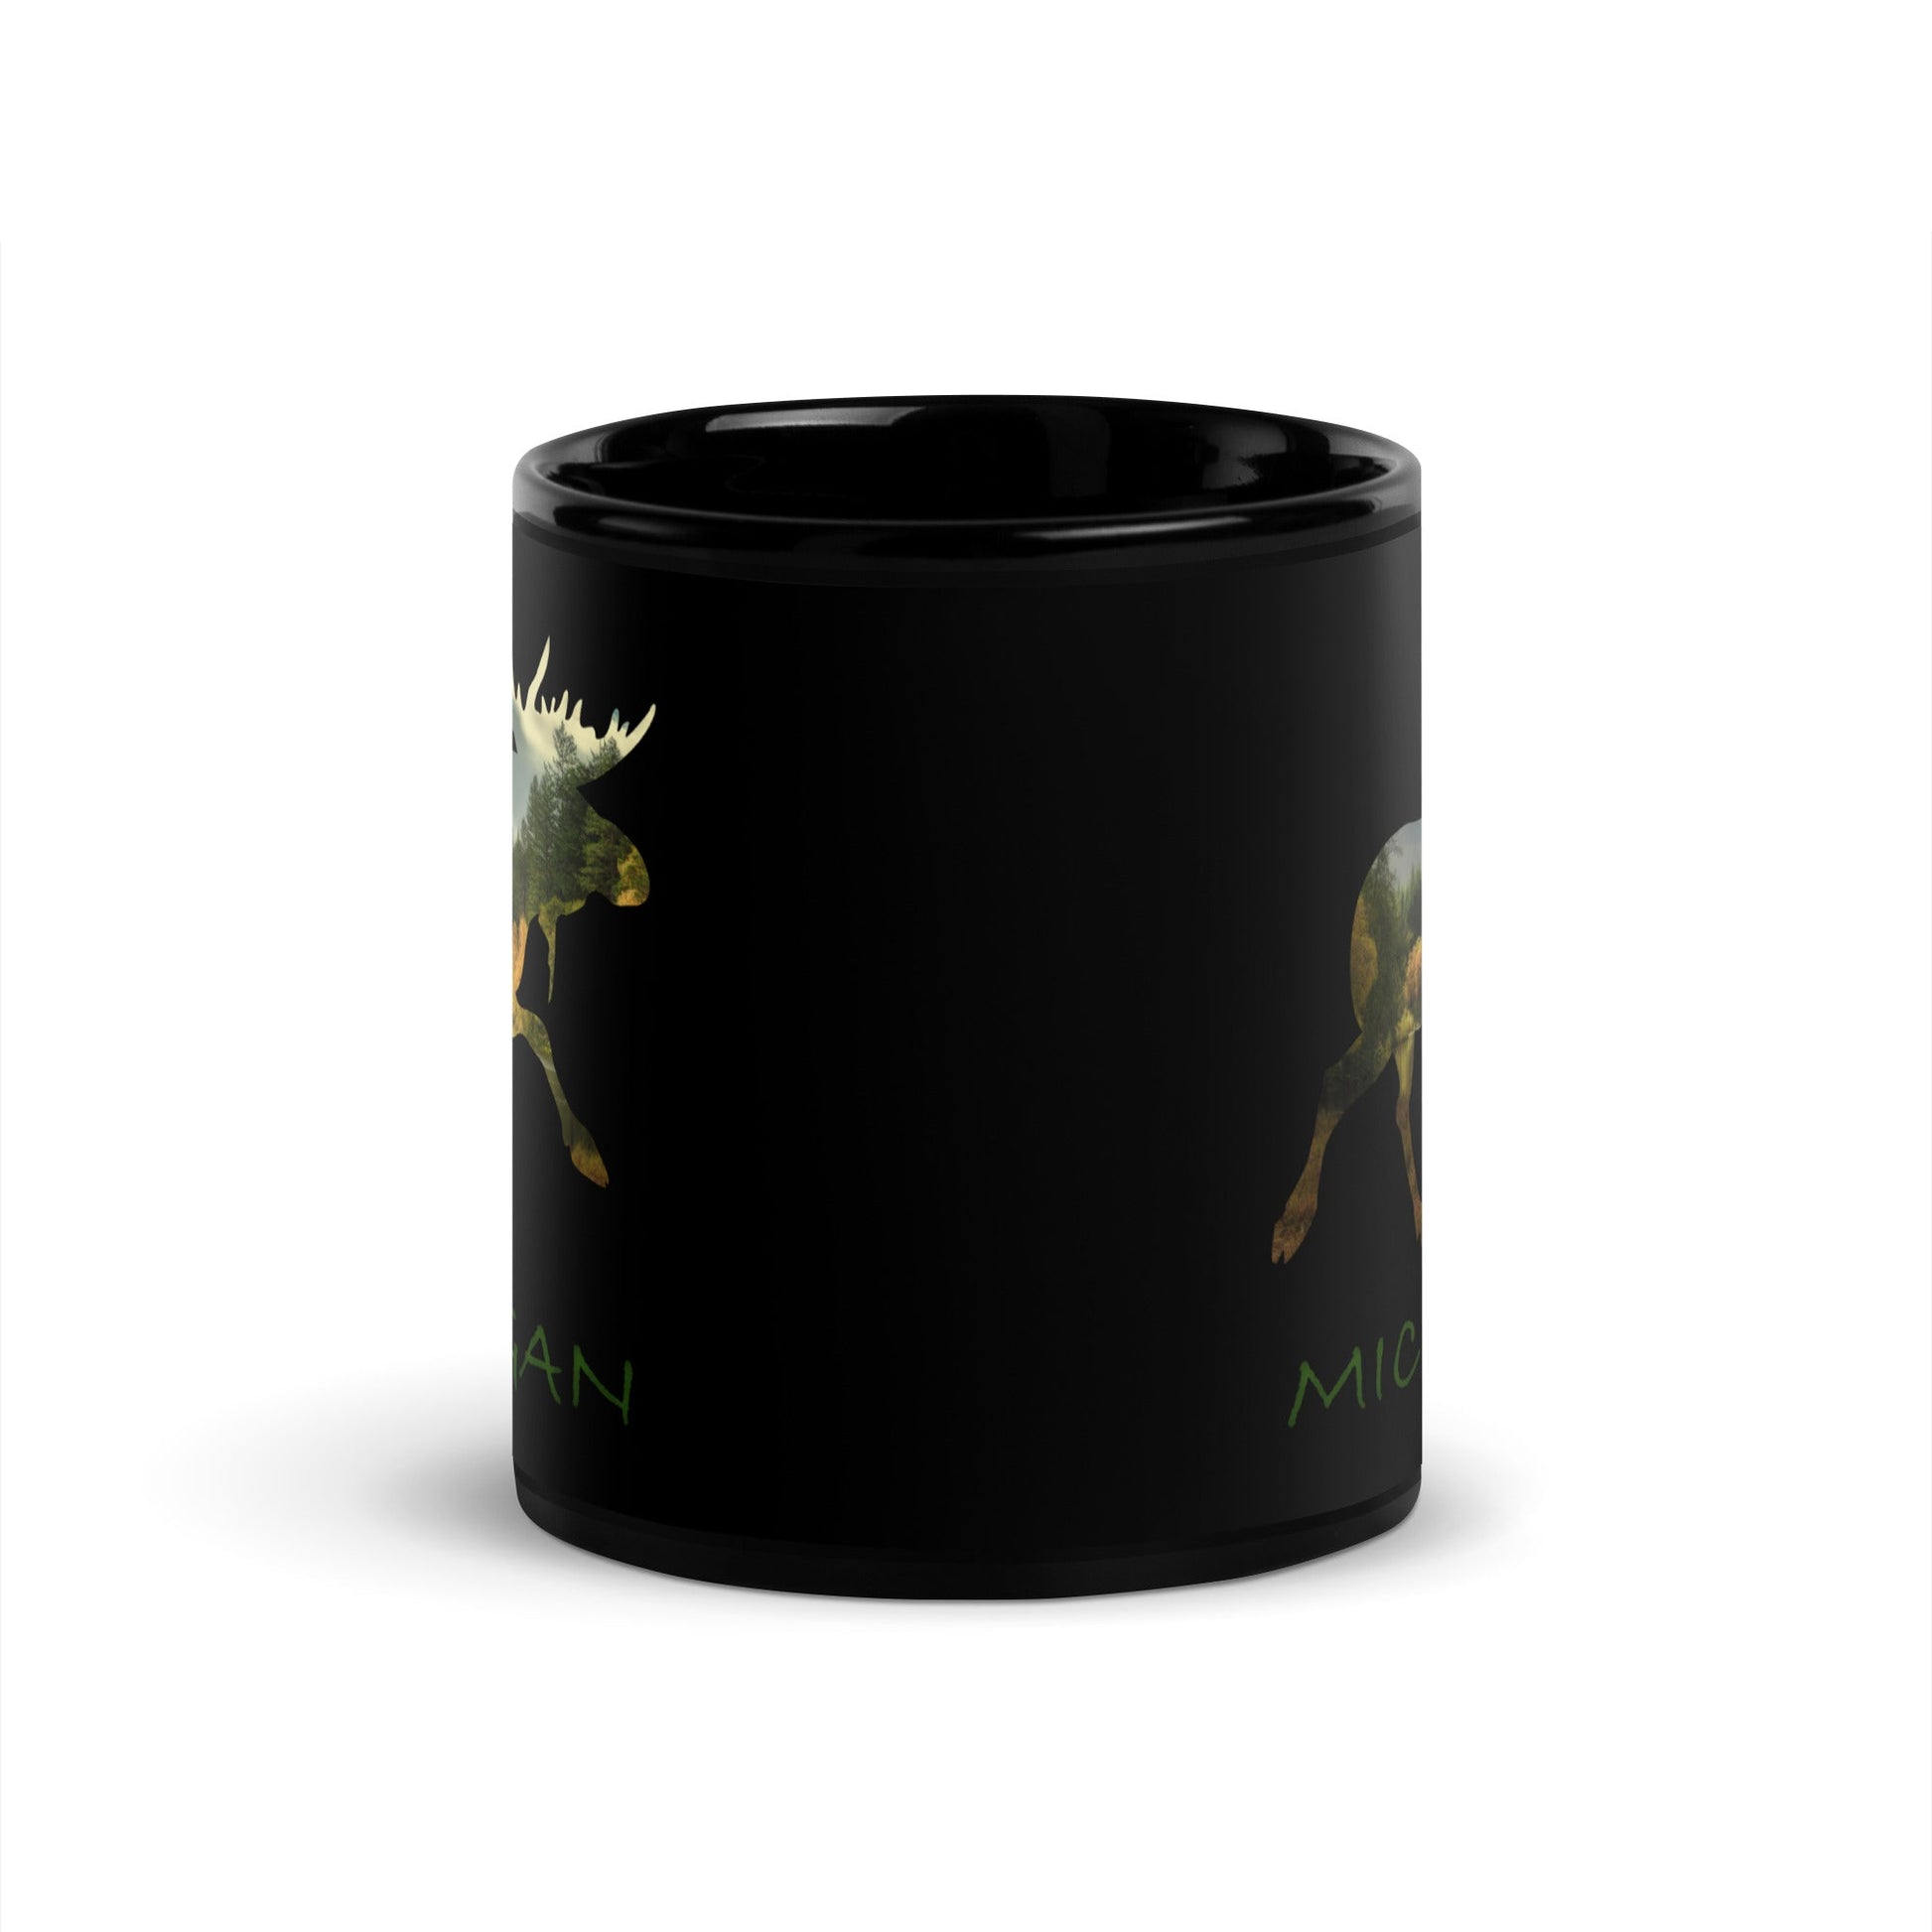 Michigan Souvenir Moose Black Glossy Ceramic Mug